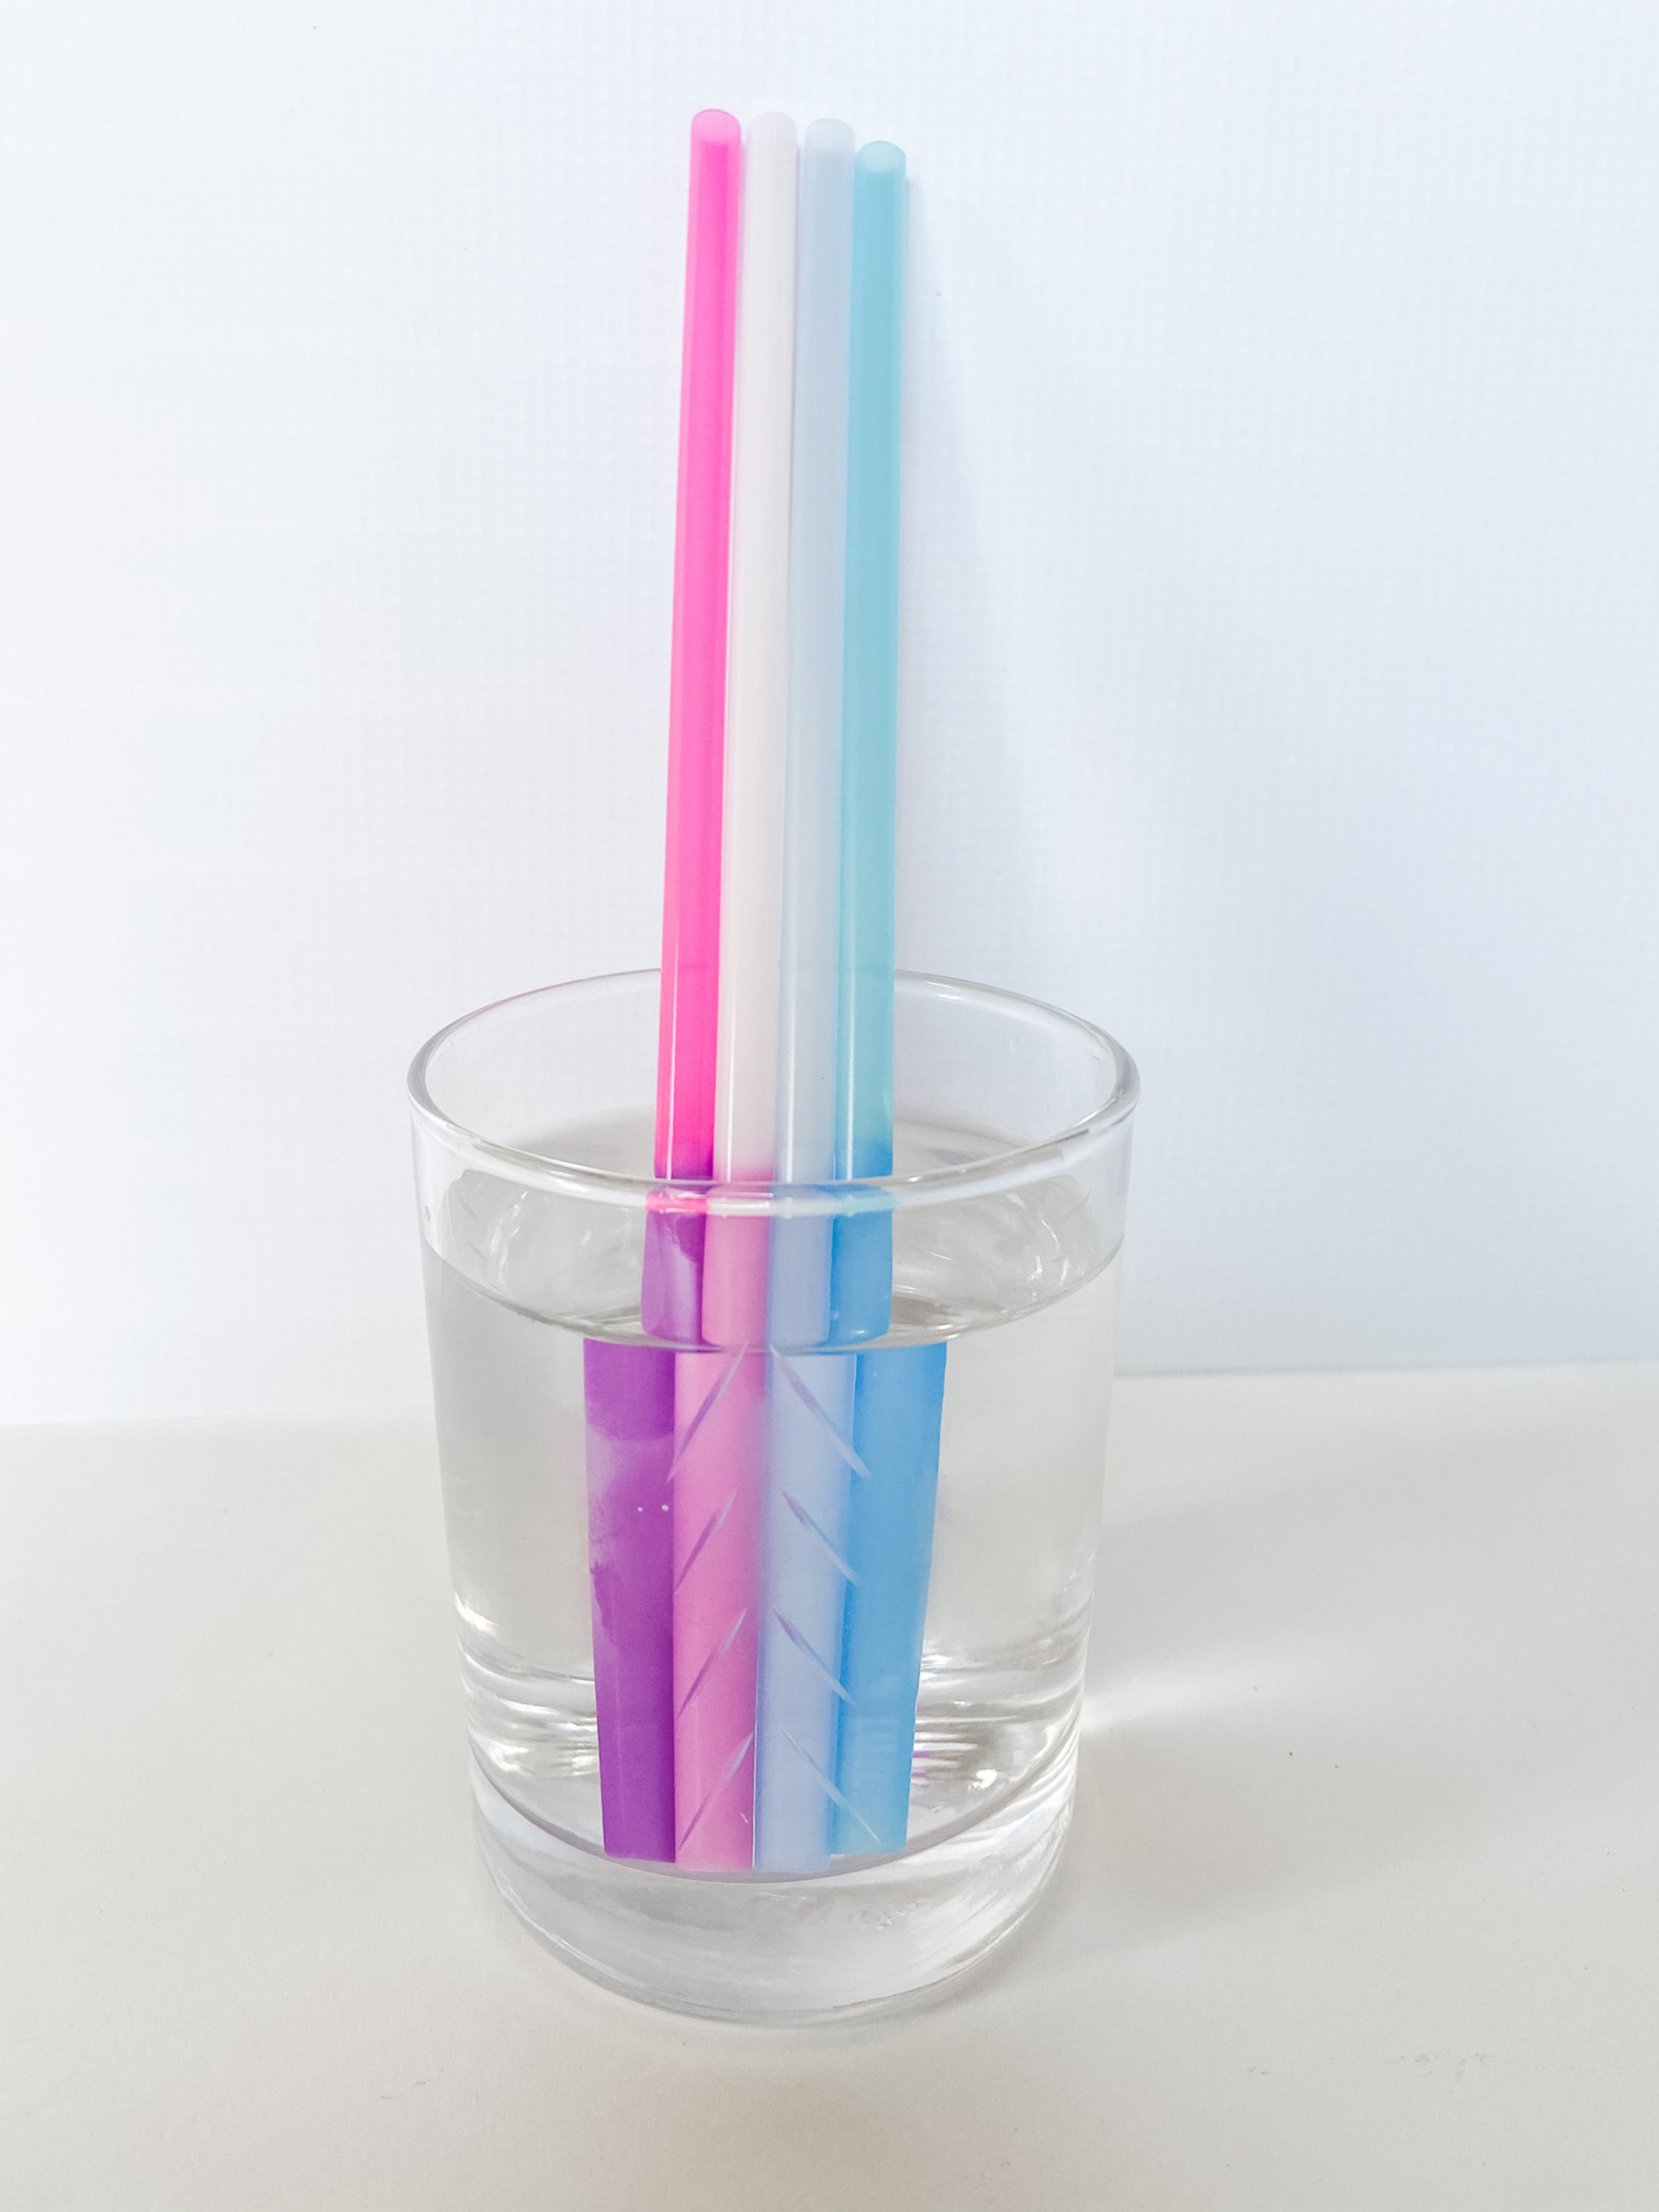 10 ORIGINAL Color Changing Easter Treats Reusable Plastic Straws 5